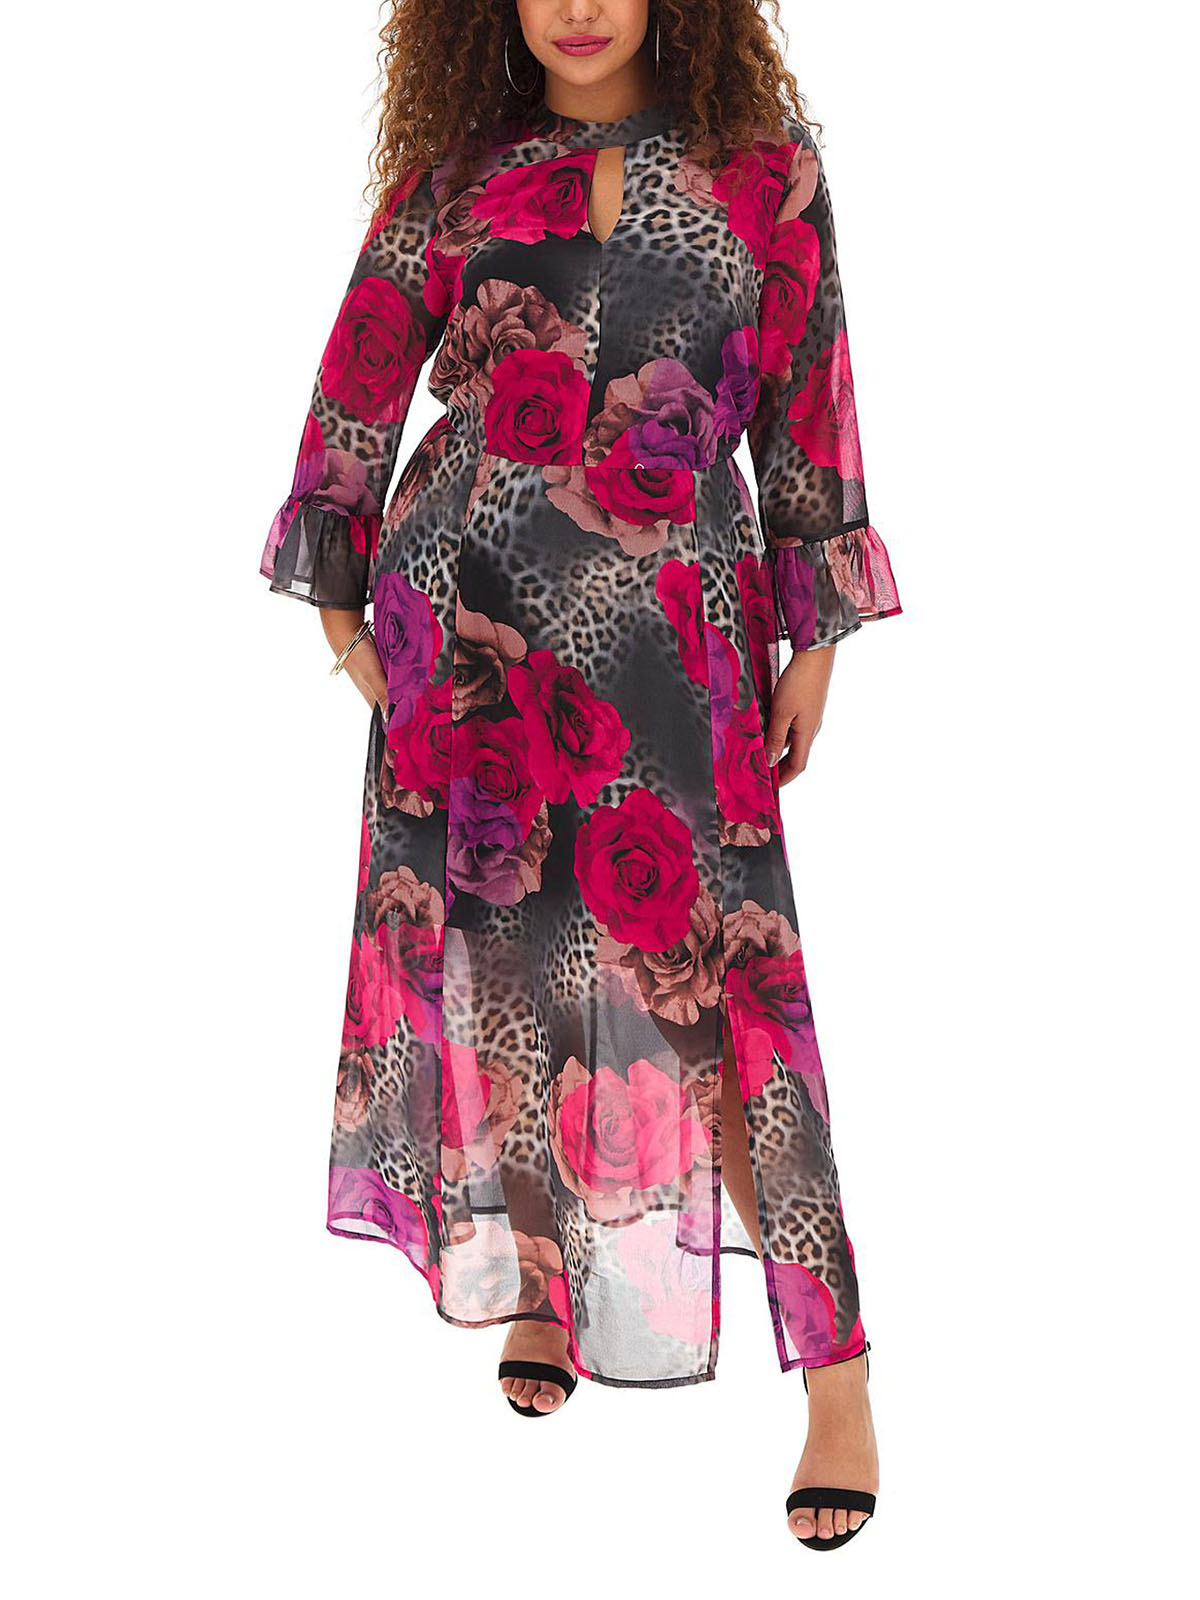 Joanna Hope - - Joanna Hope BLACK Animal Rose Print Maxi Dress - Plus Size  16 to 18